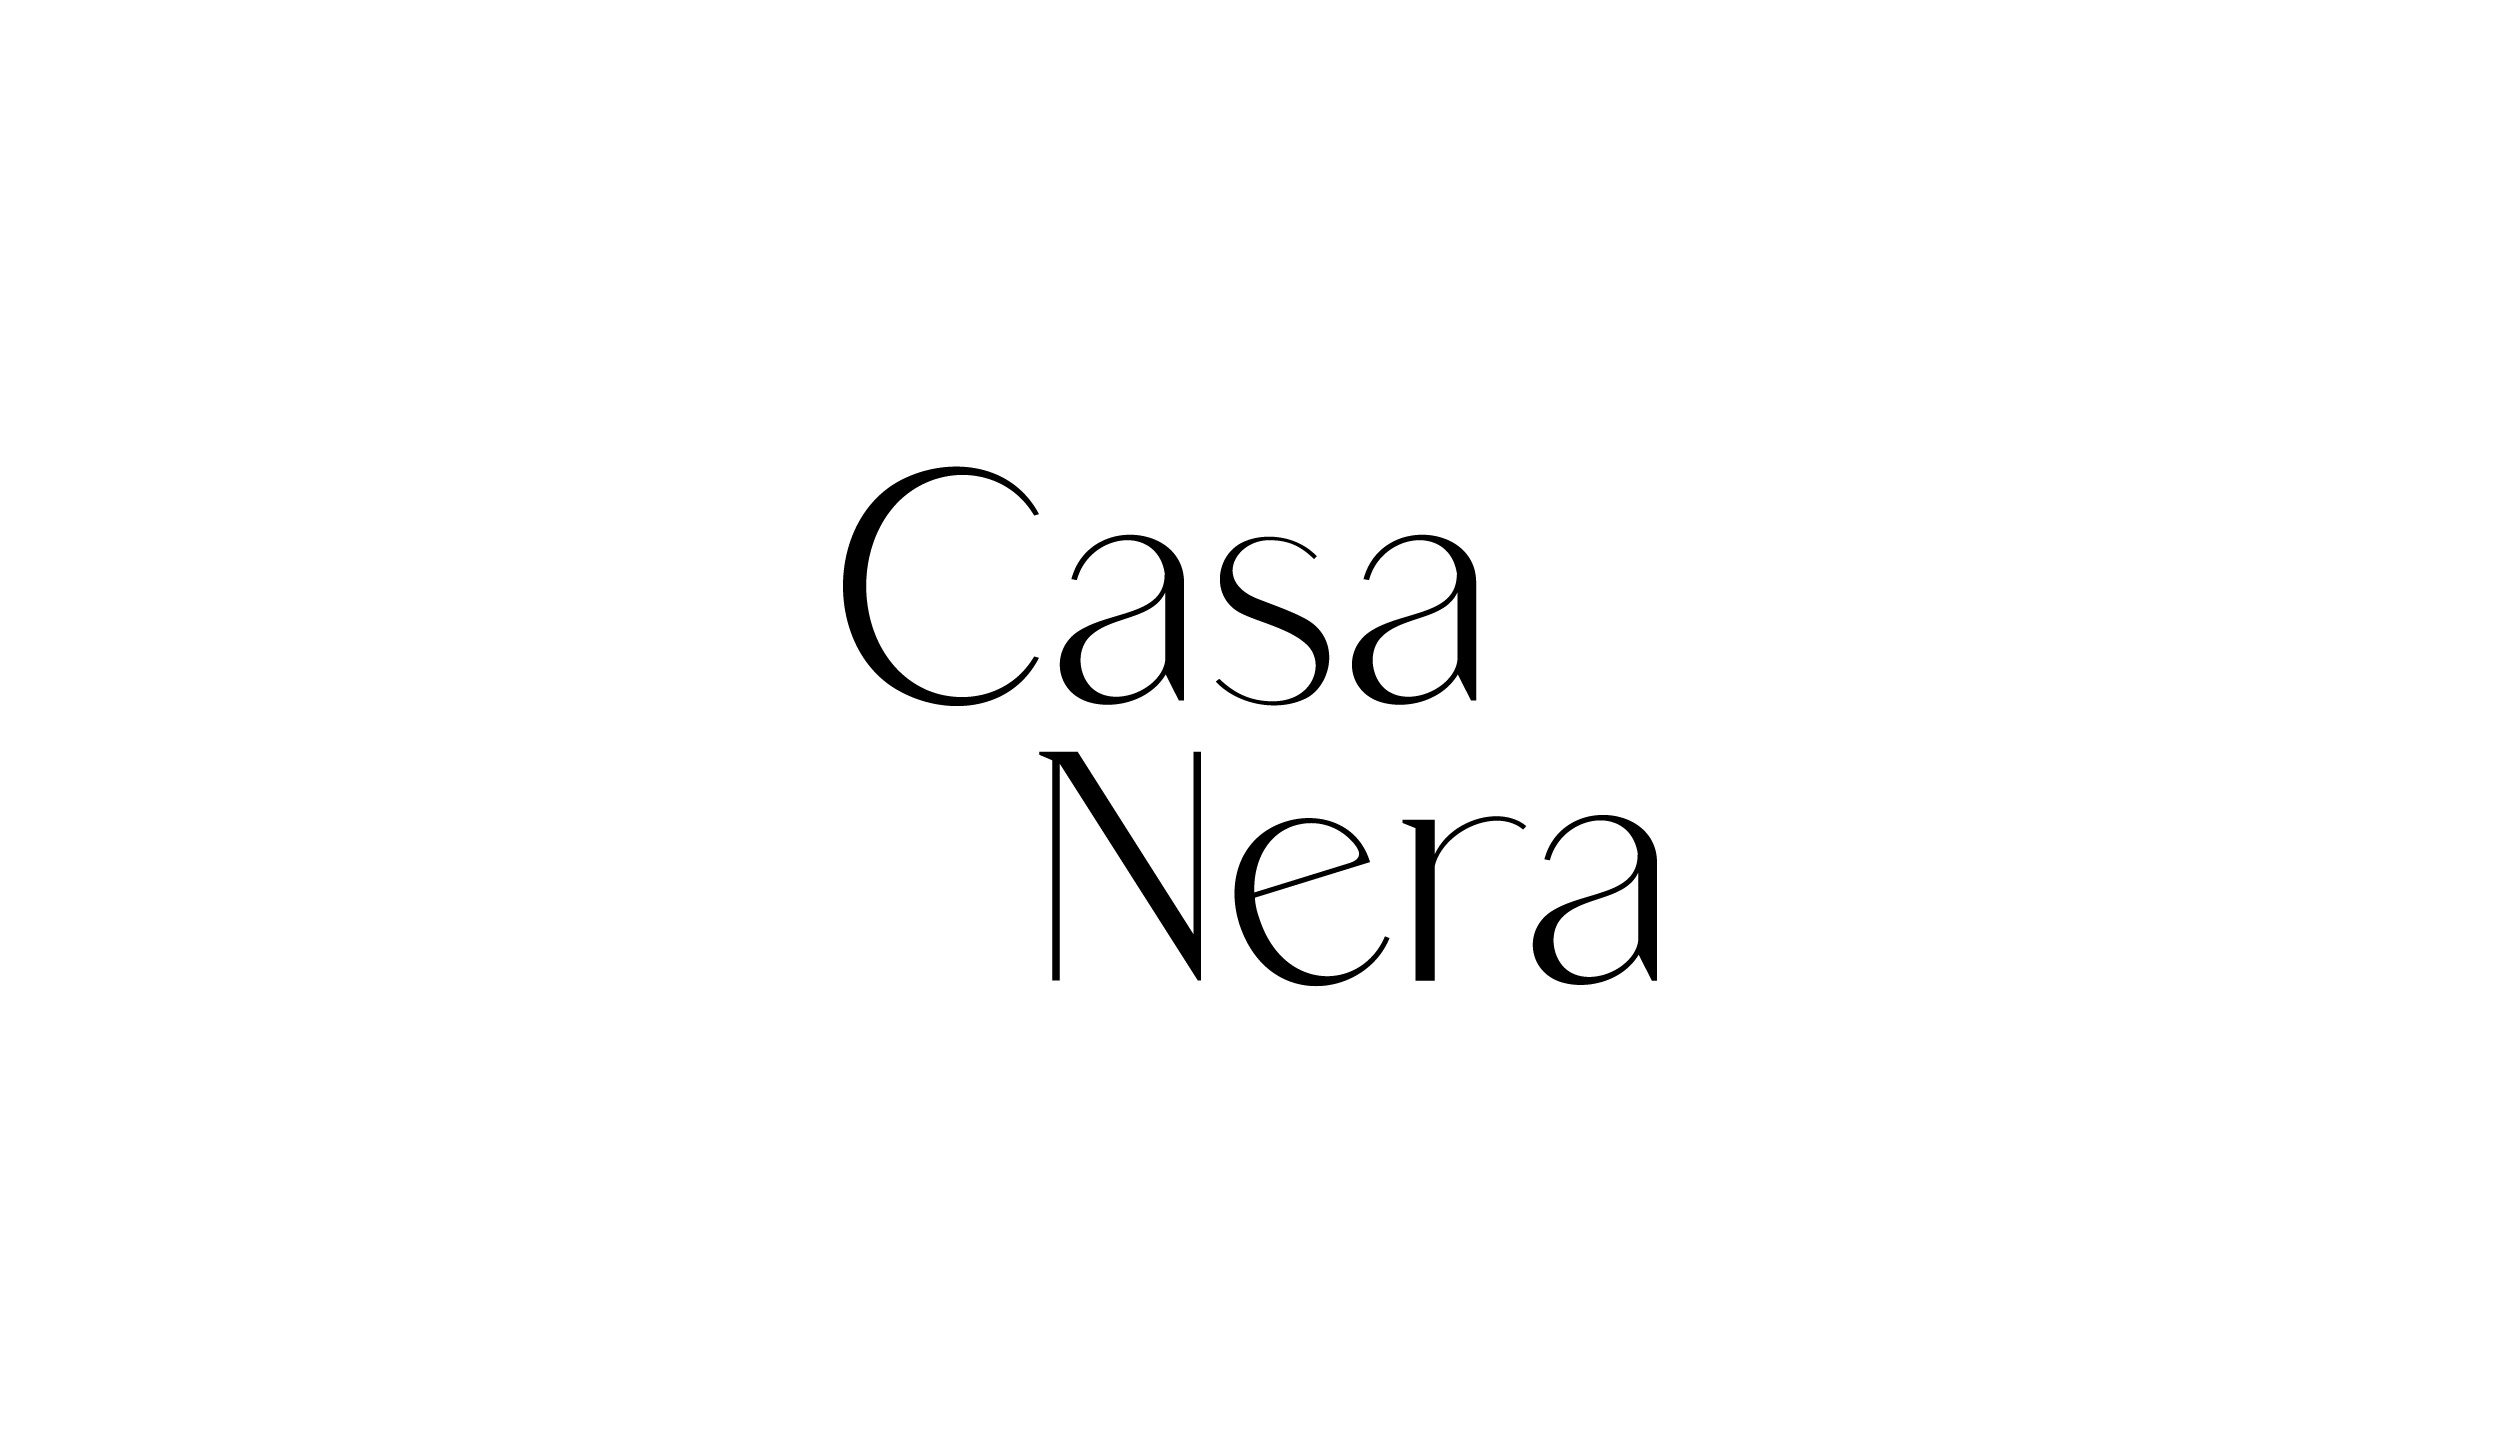 CASA NERA_imagenes para web papa-00.jpg